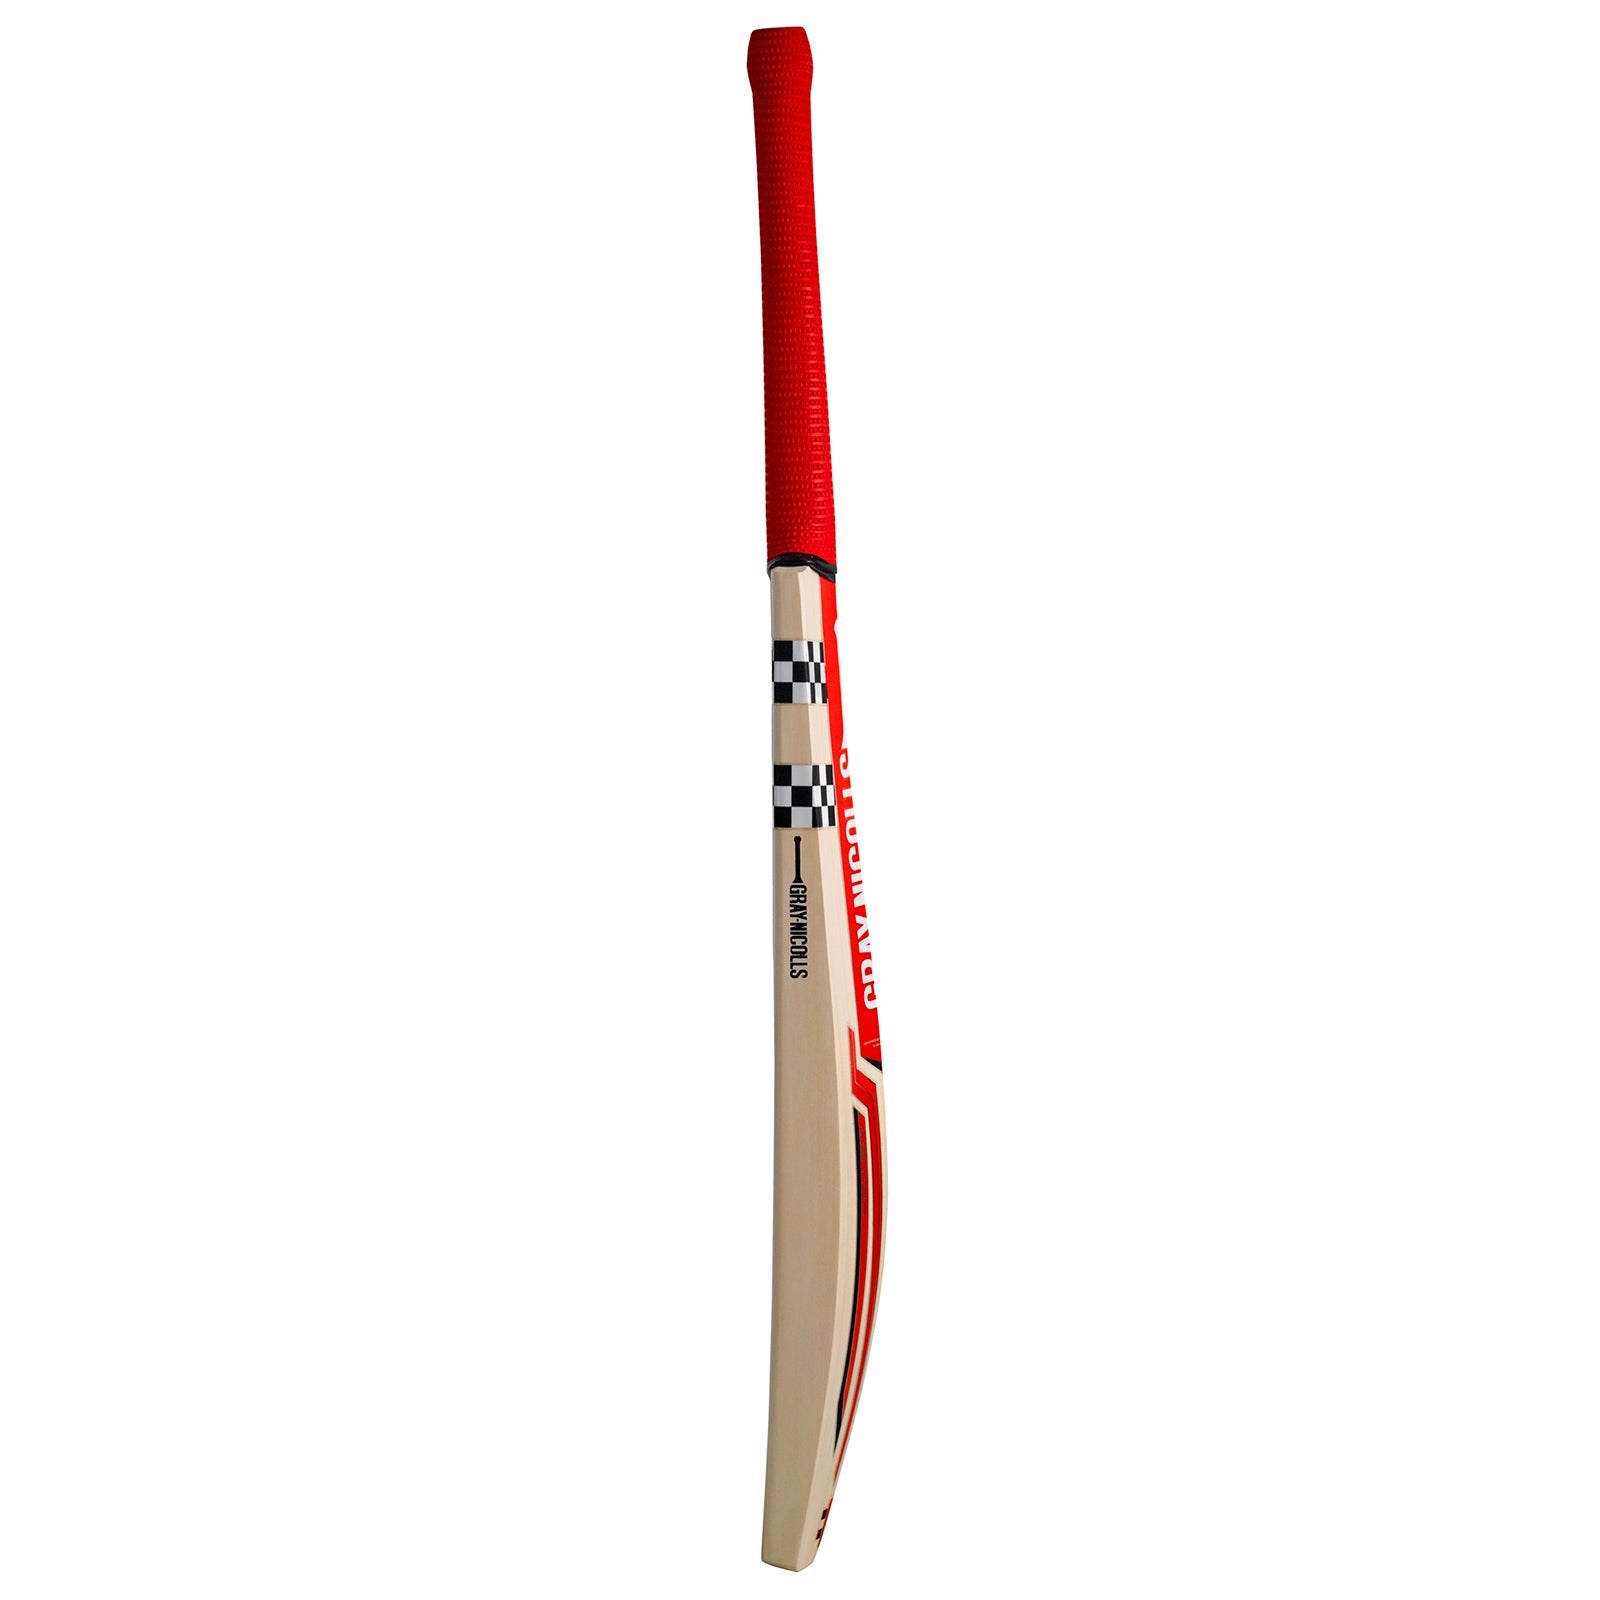 Gray Nicolls Astro 1300 Cricket Bat - Senior